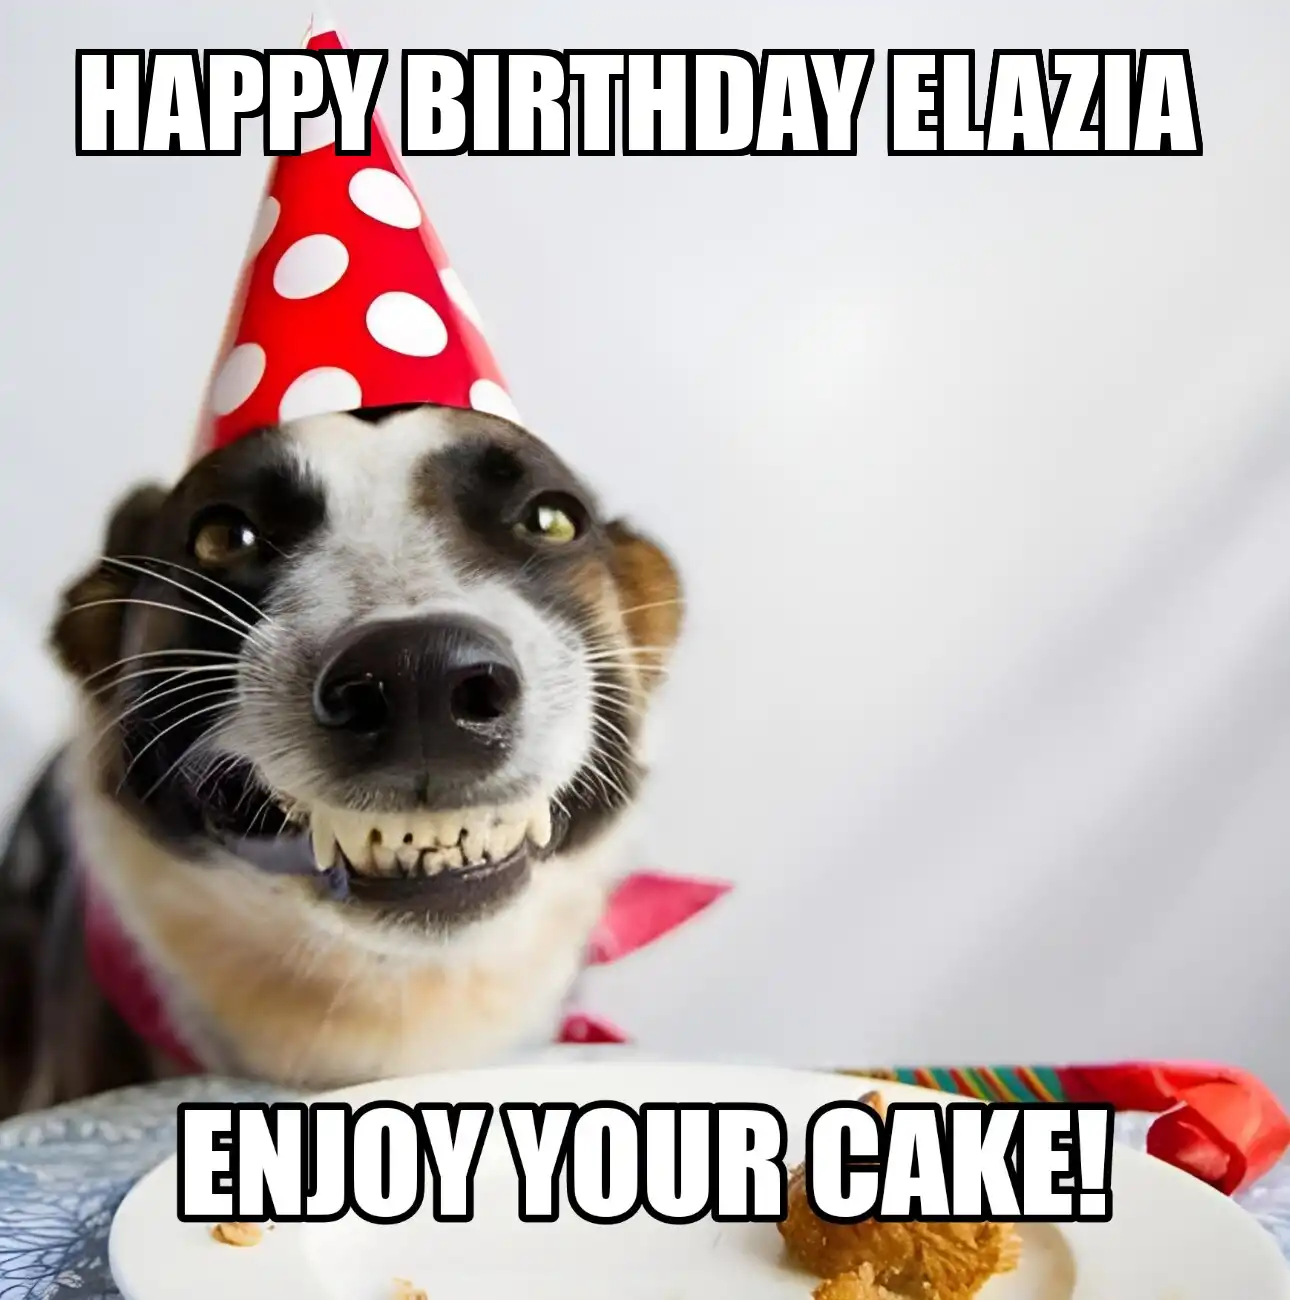 Happy Birthday Elazia Enjoy Your Cake Dog Meme